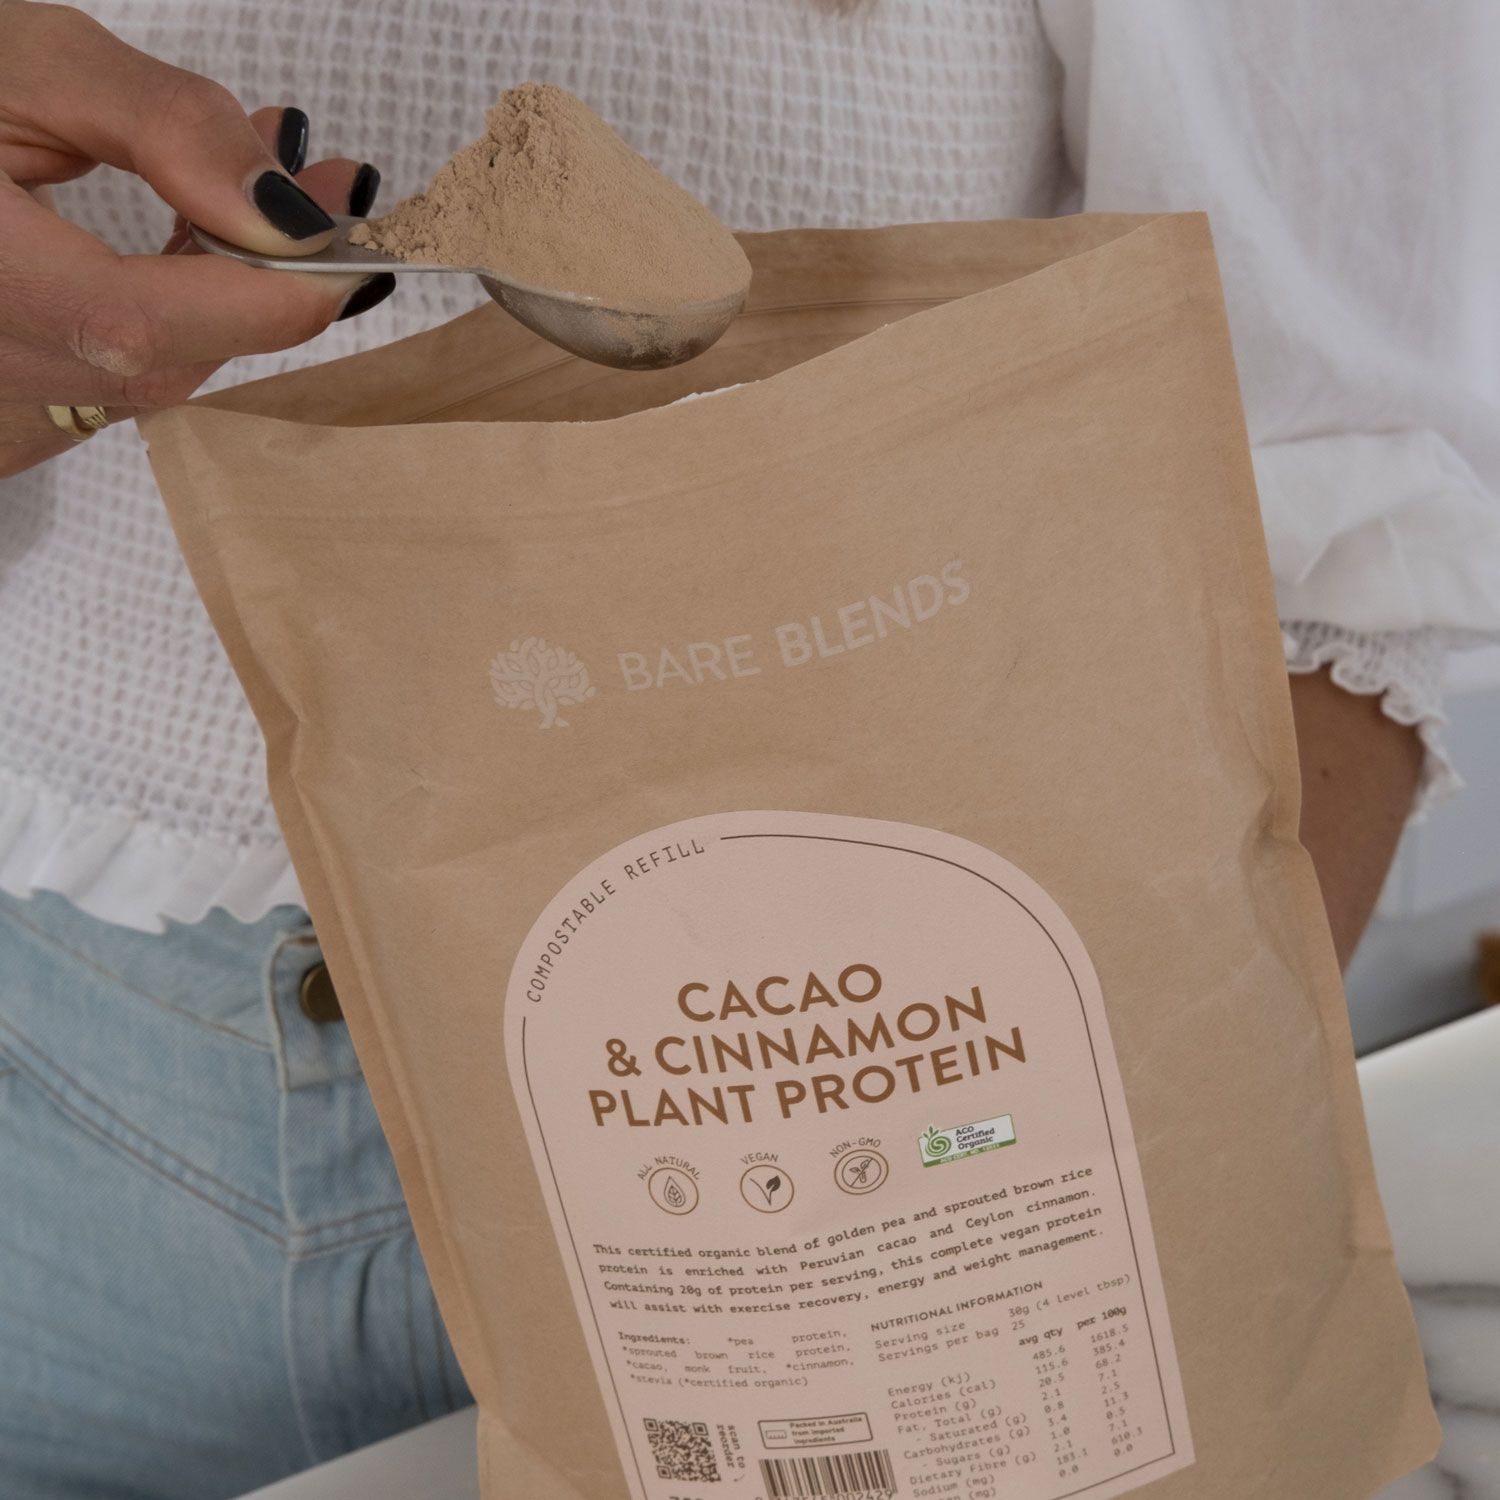 Cacao & Cinnamon Plant Protein